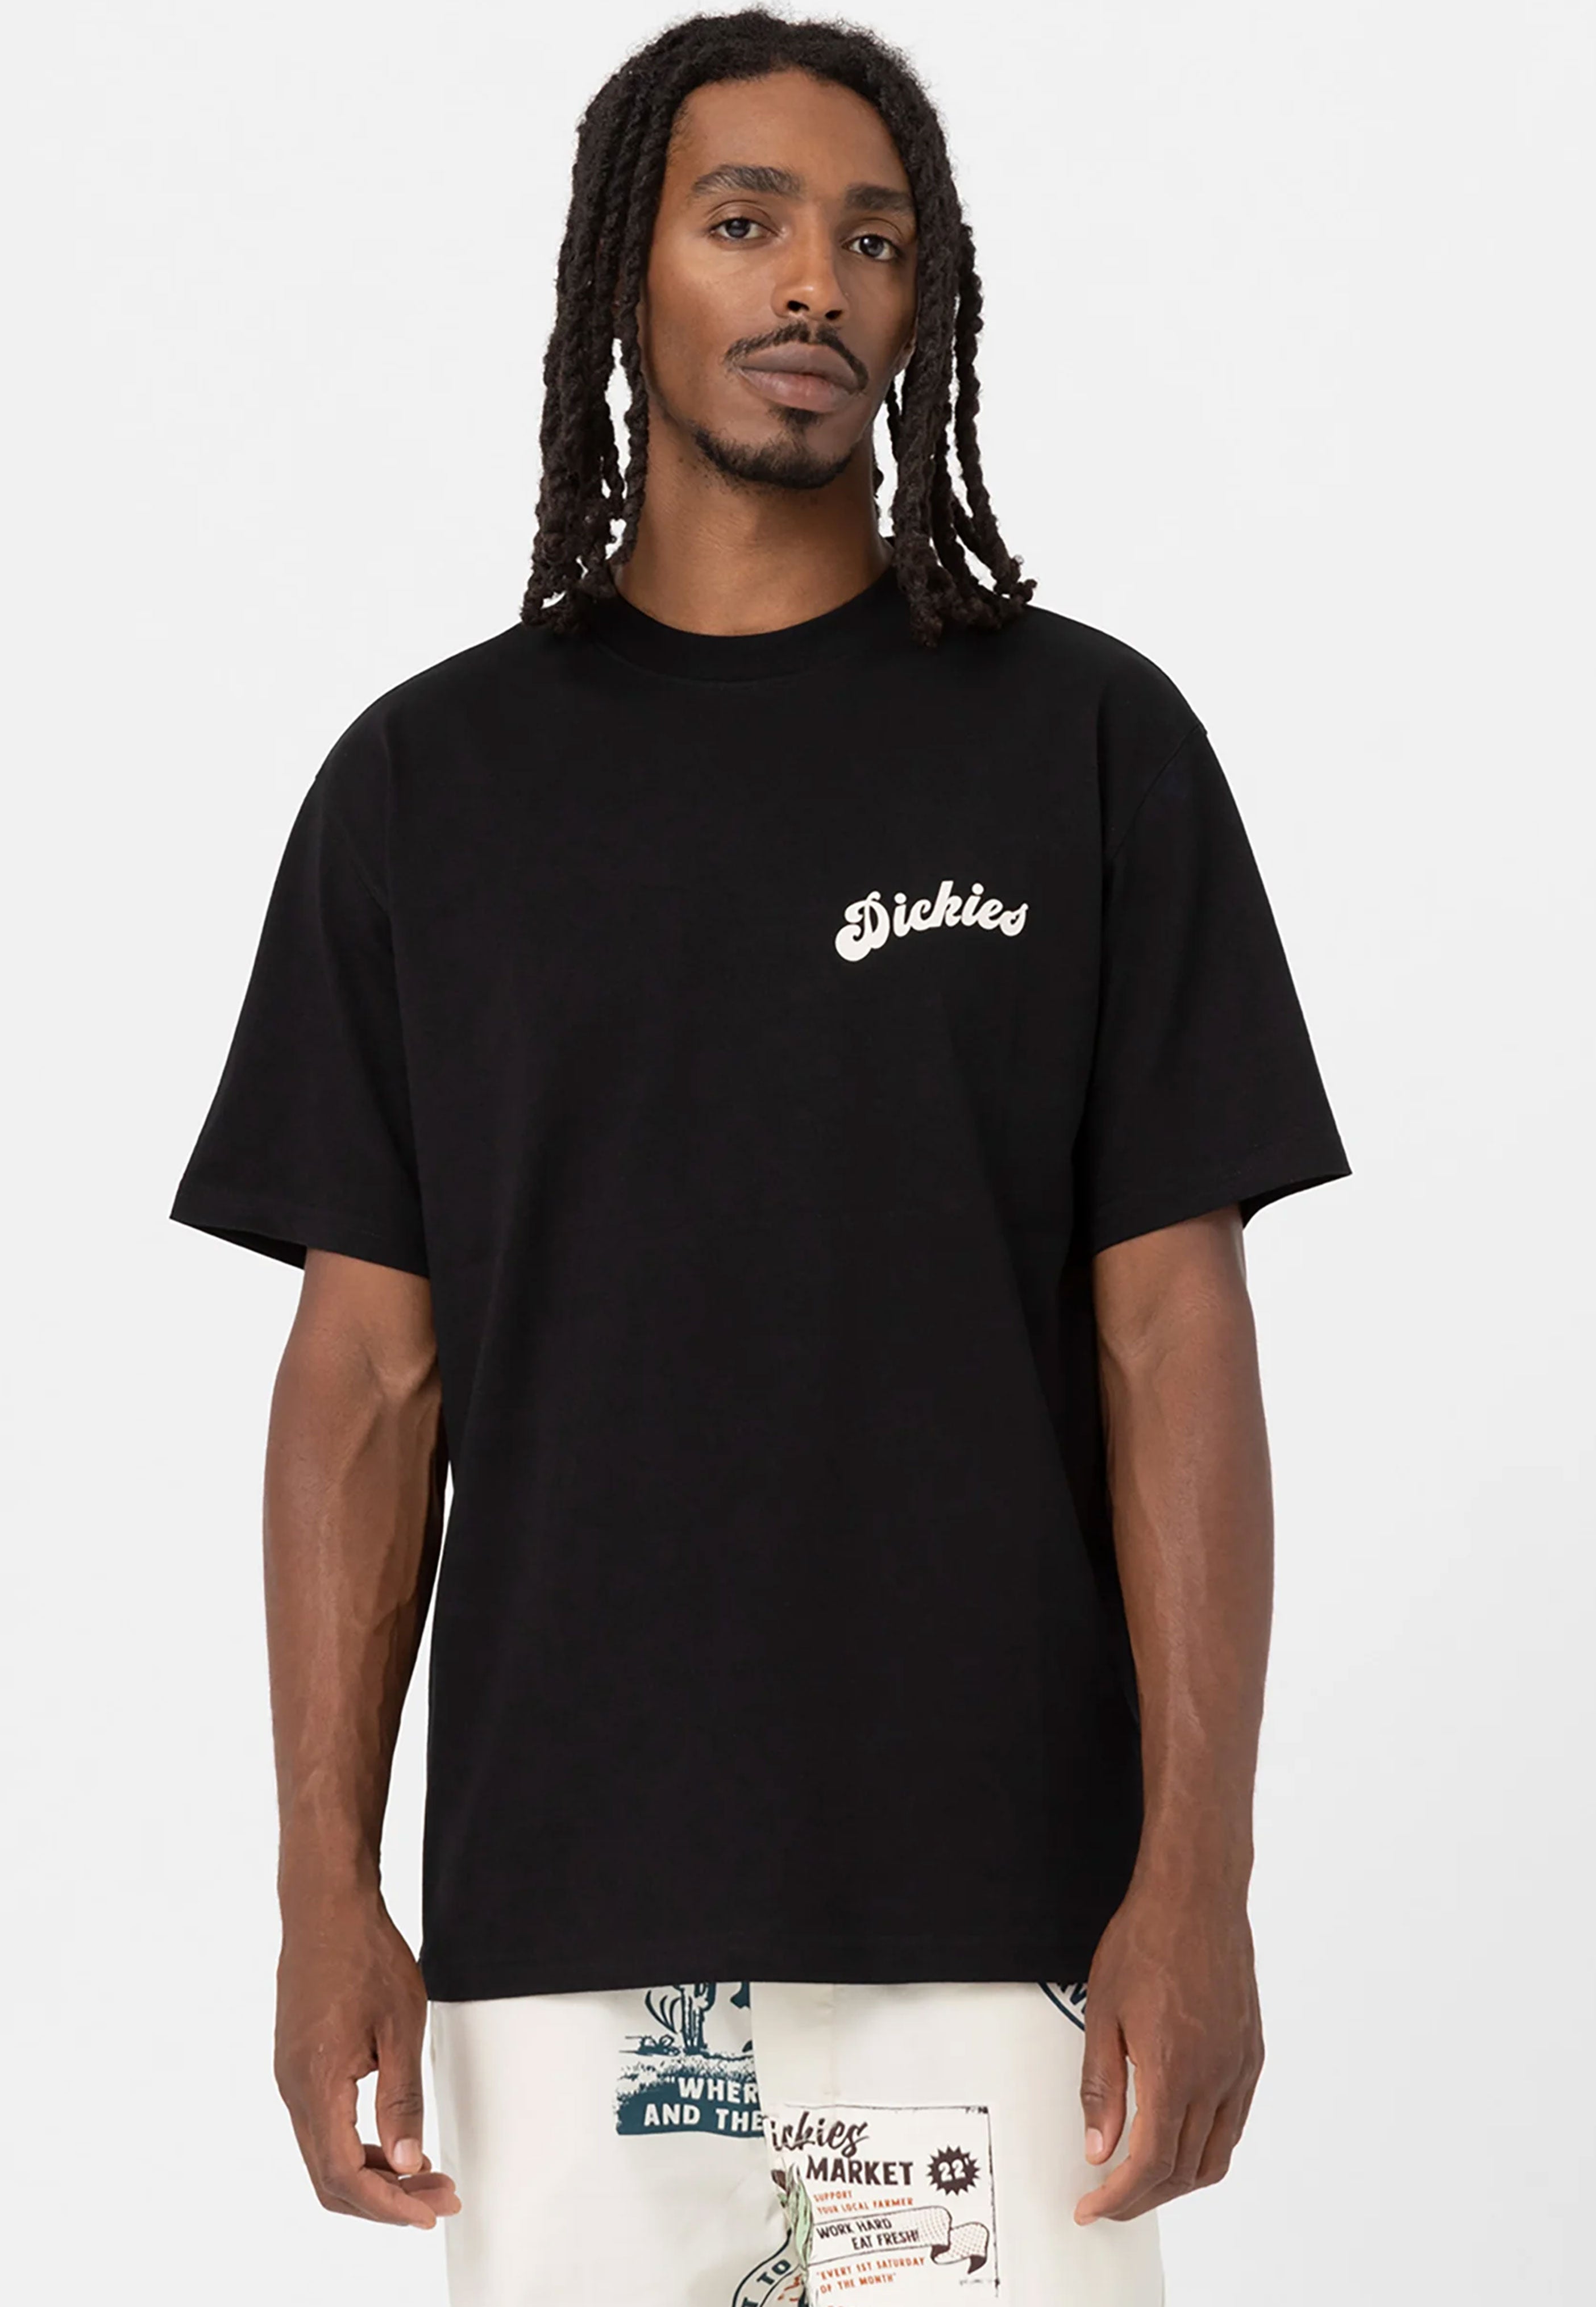 Dickies - Grainfield Black - T-Shirt